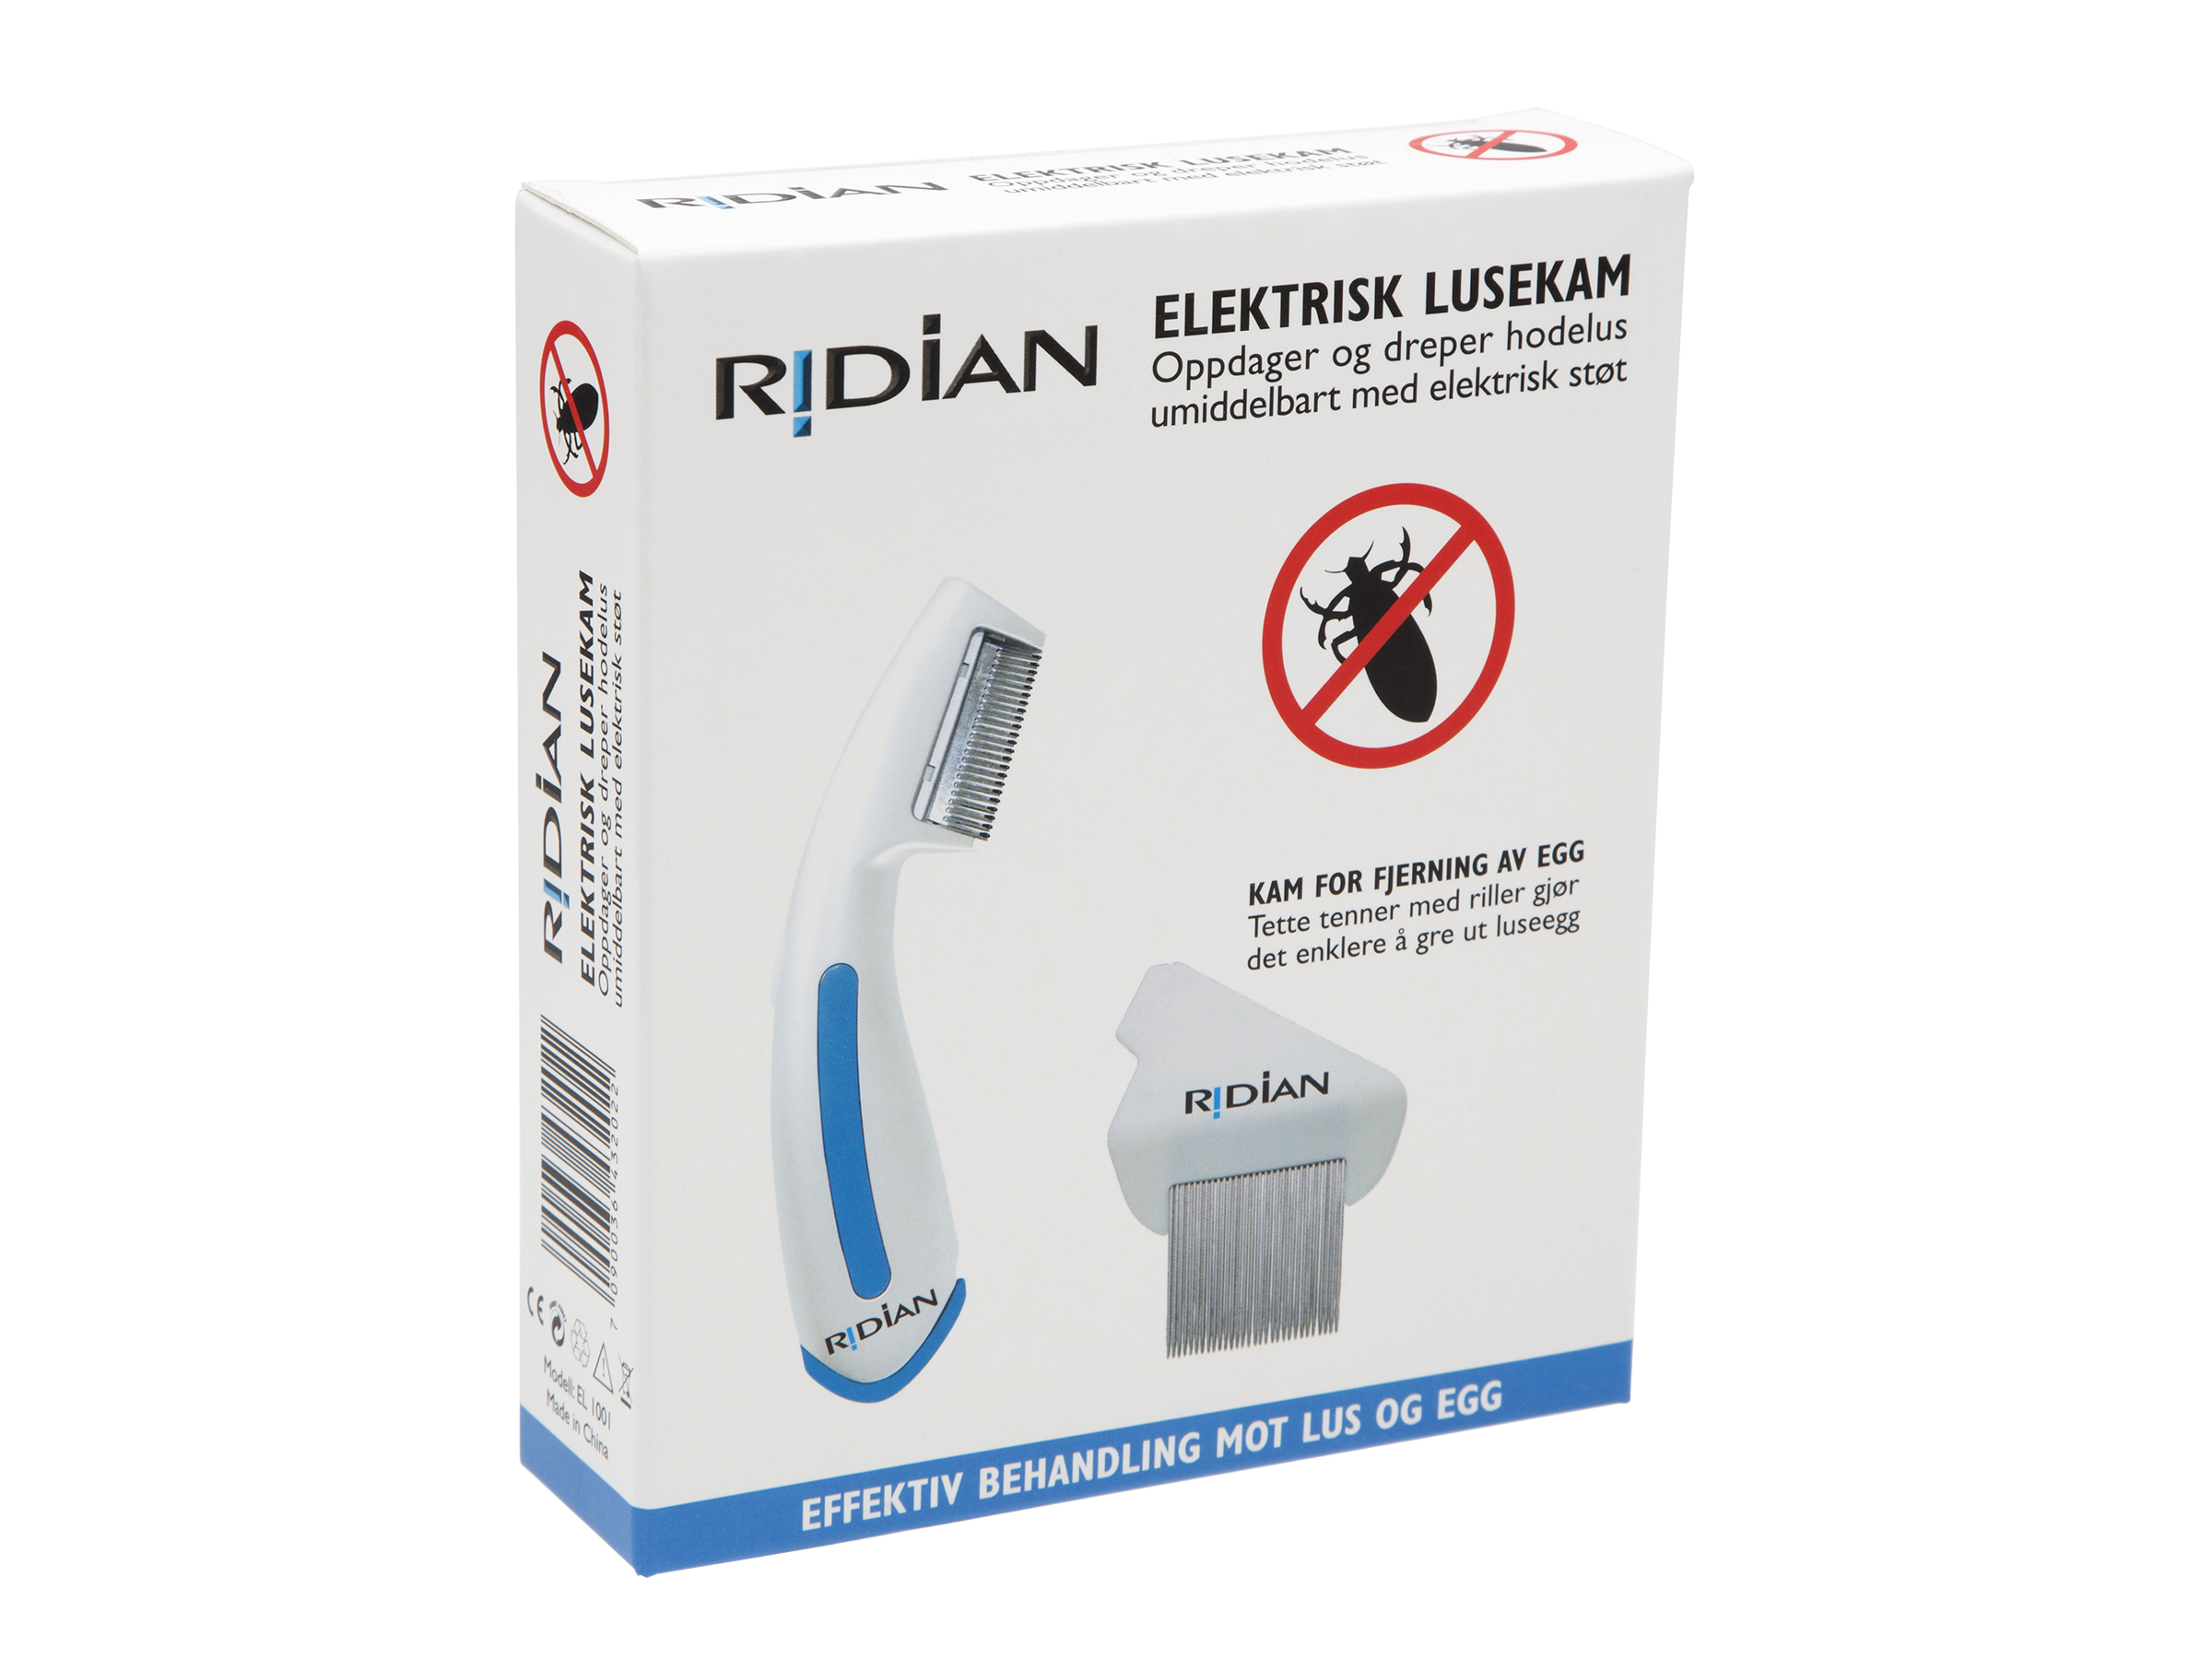 Ridian Radian elektrisk lusekam, 1 stk